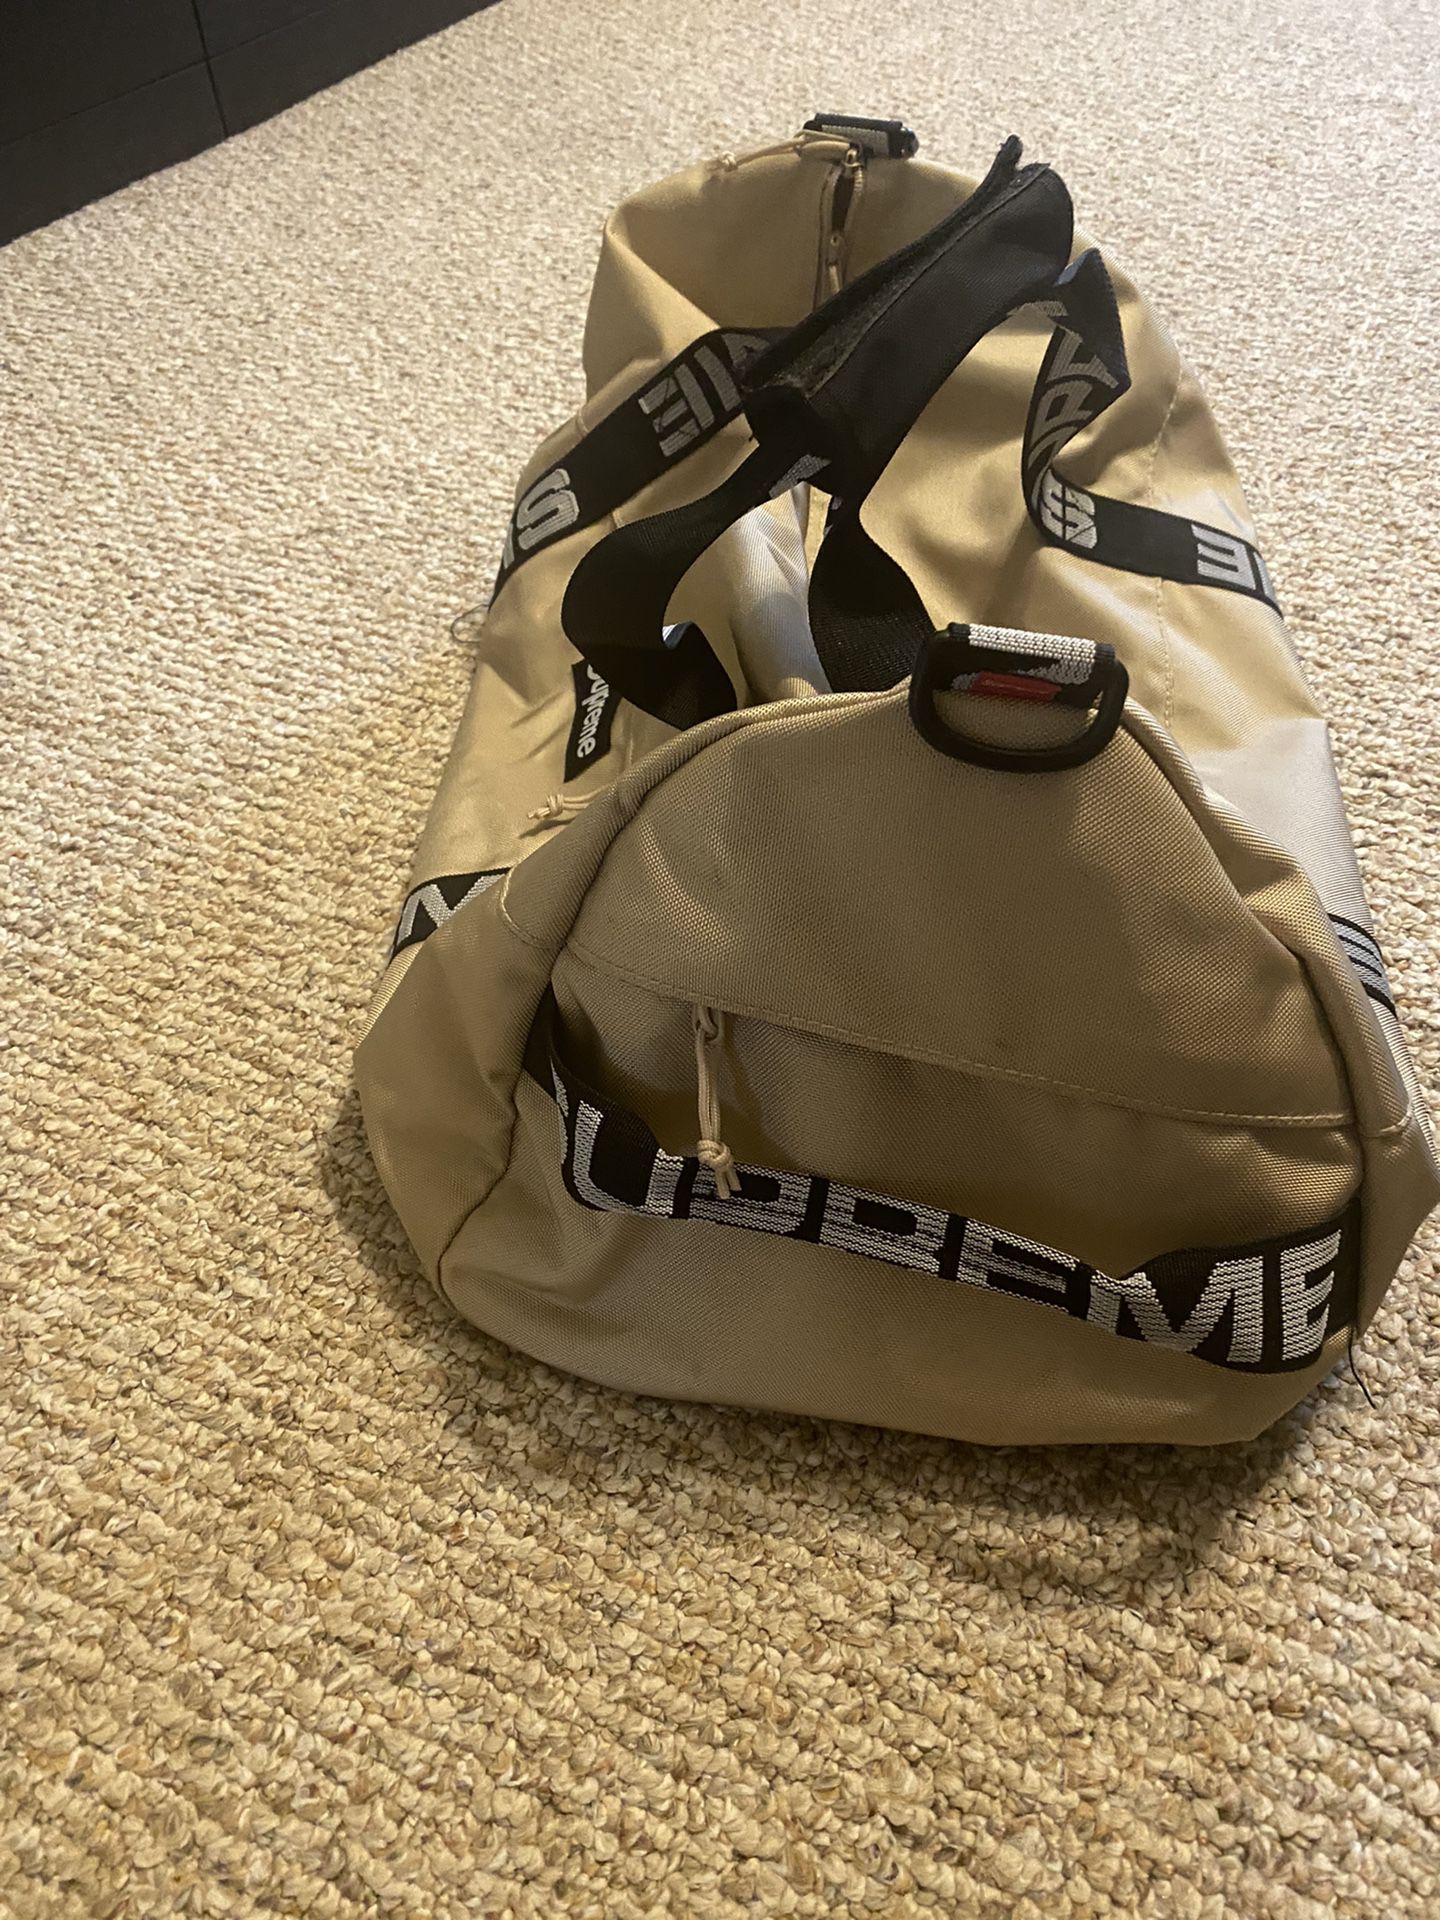 Supreme Tan Duffle Bag (SS21)